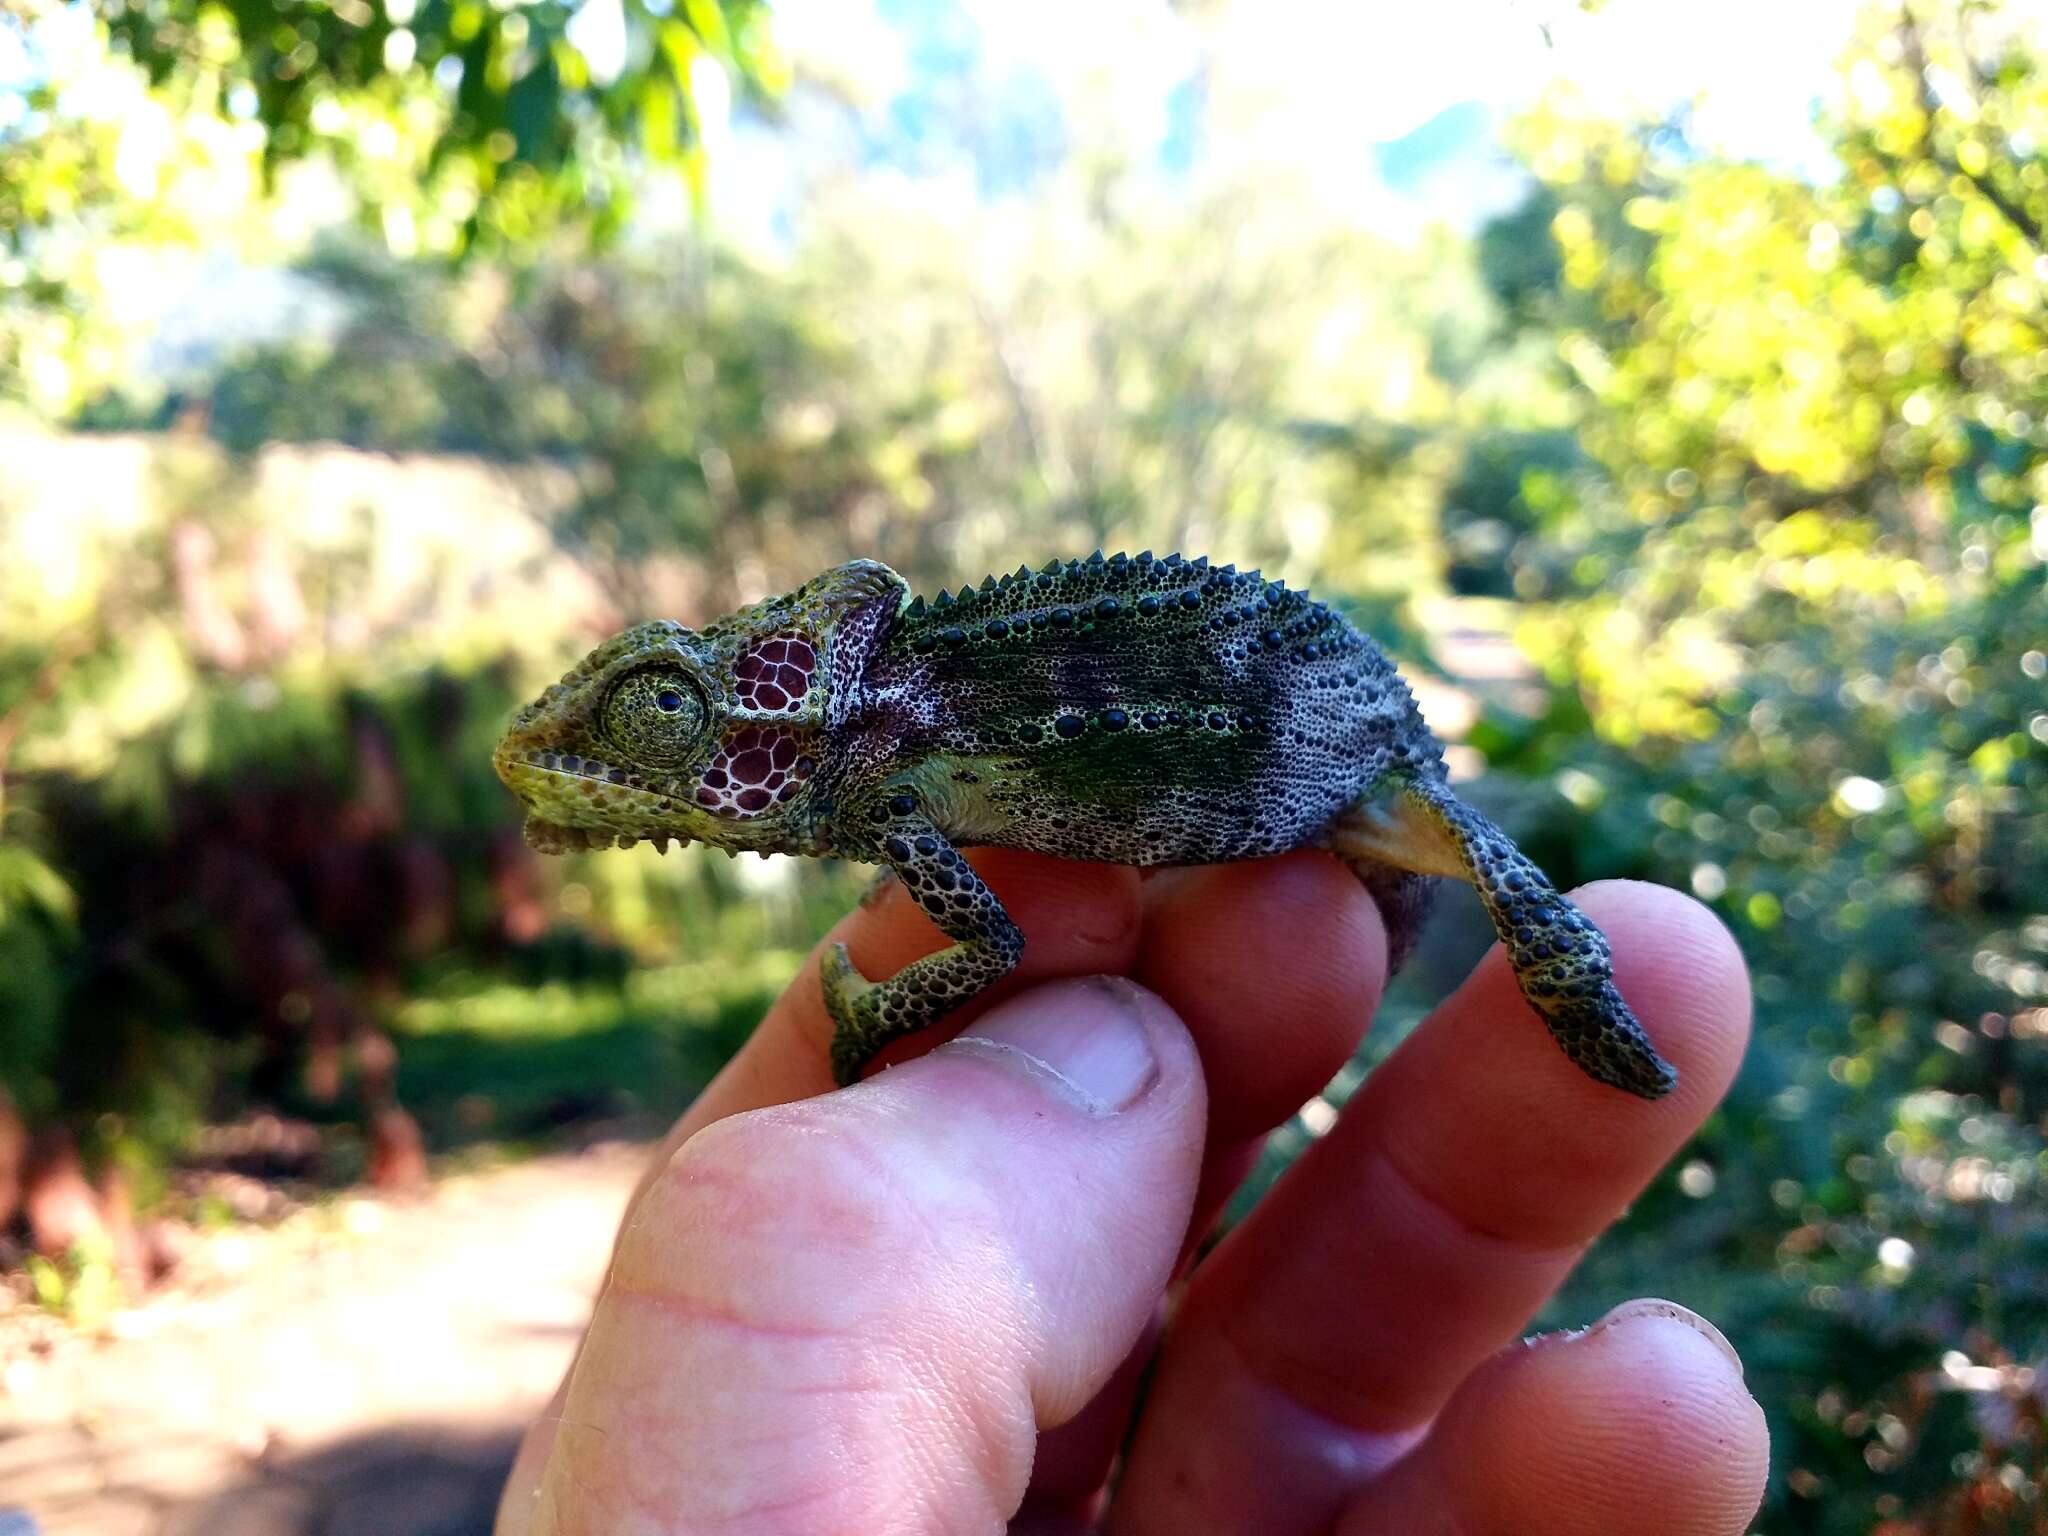 Image of Knysna dwarf chameleon